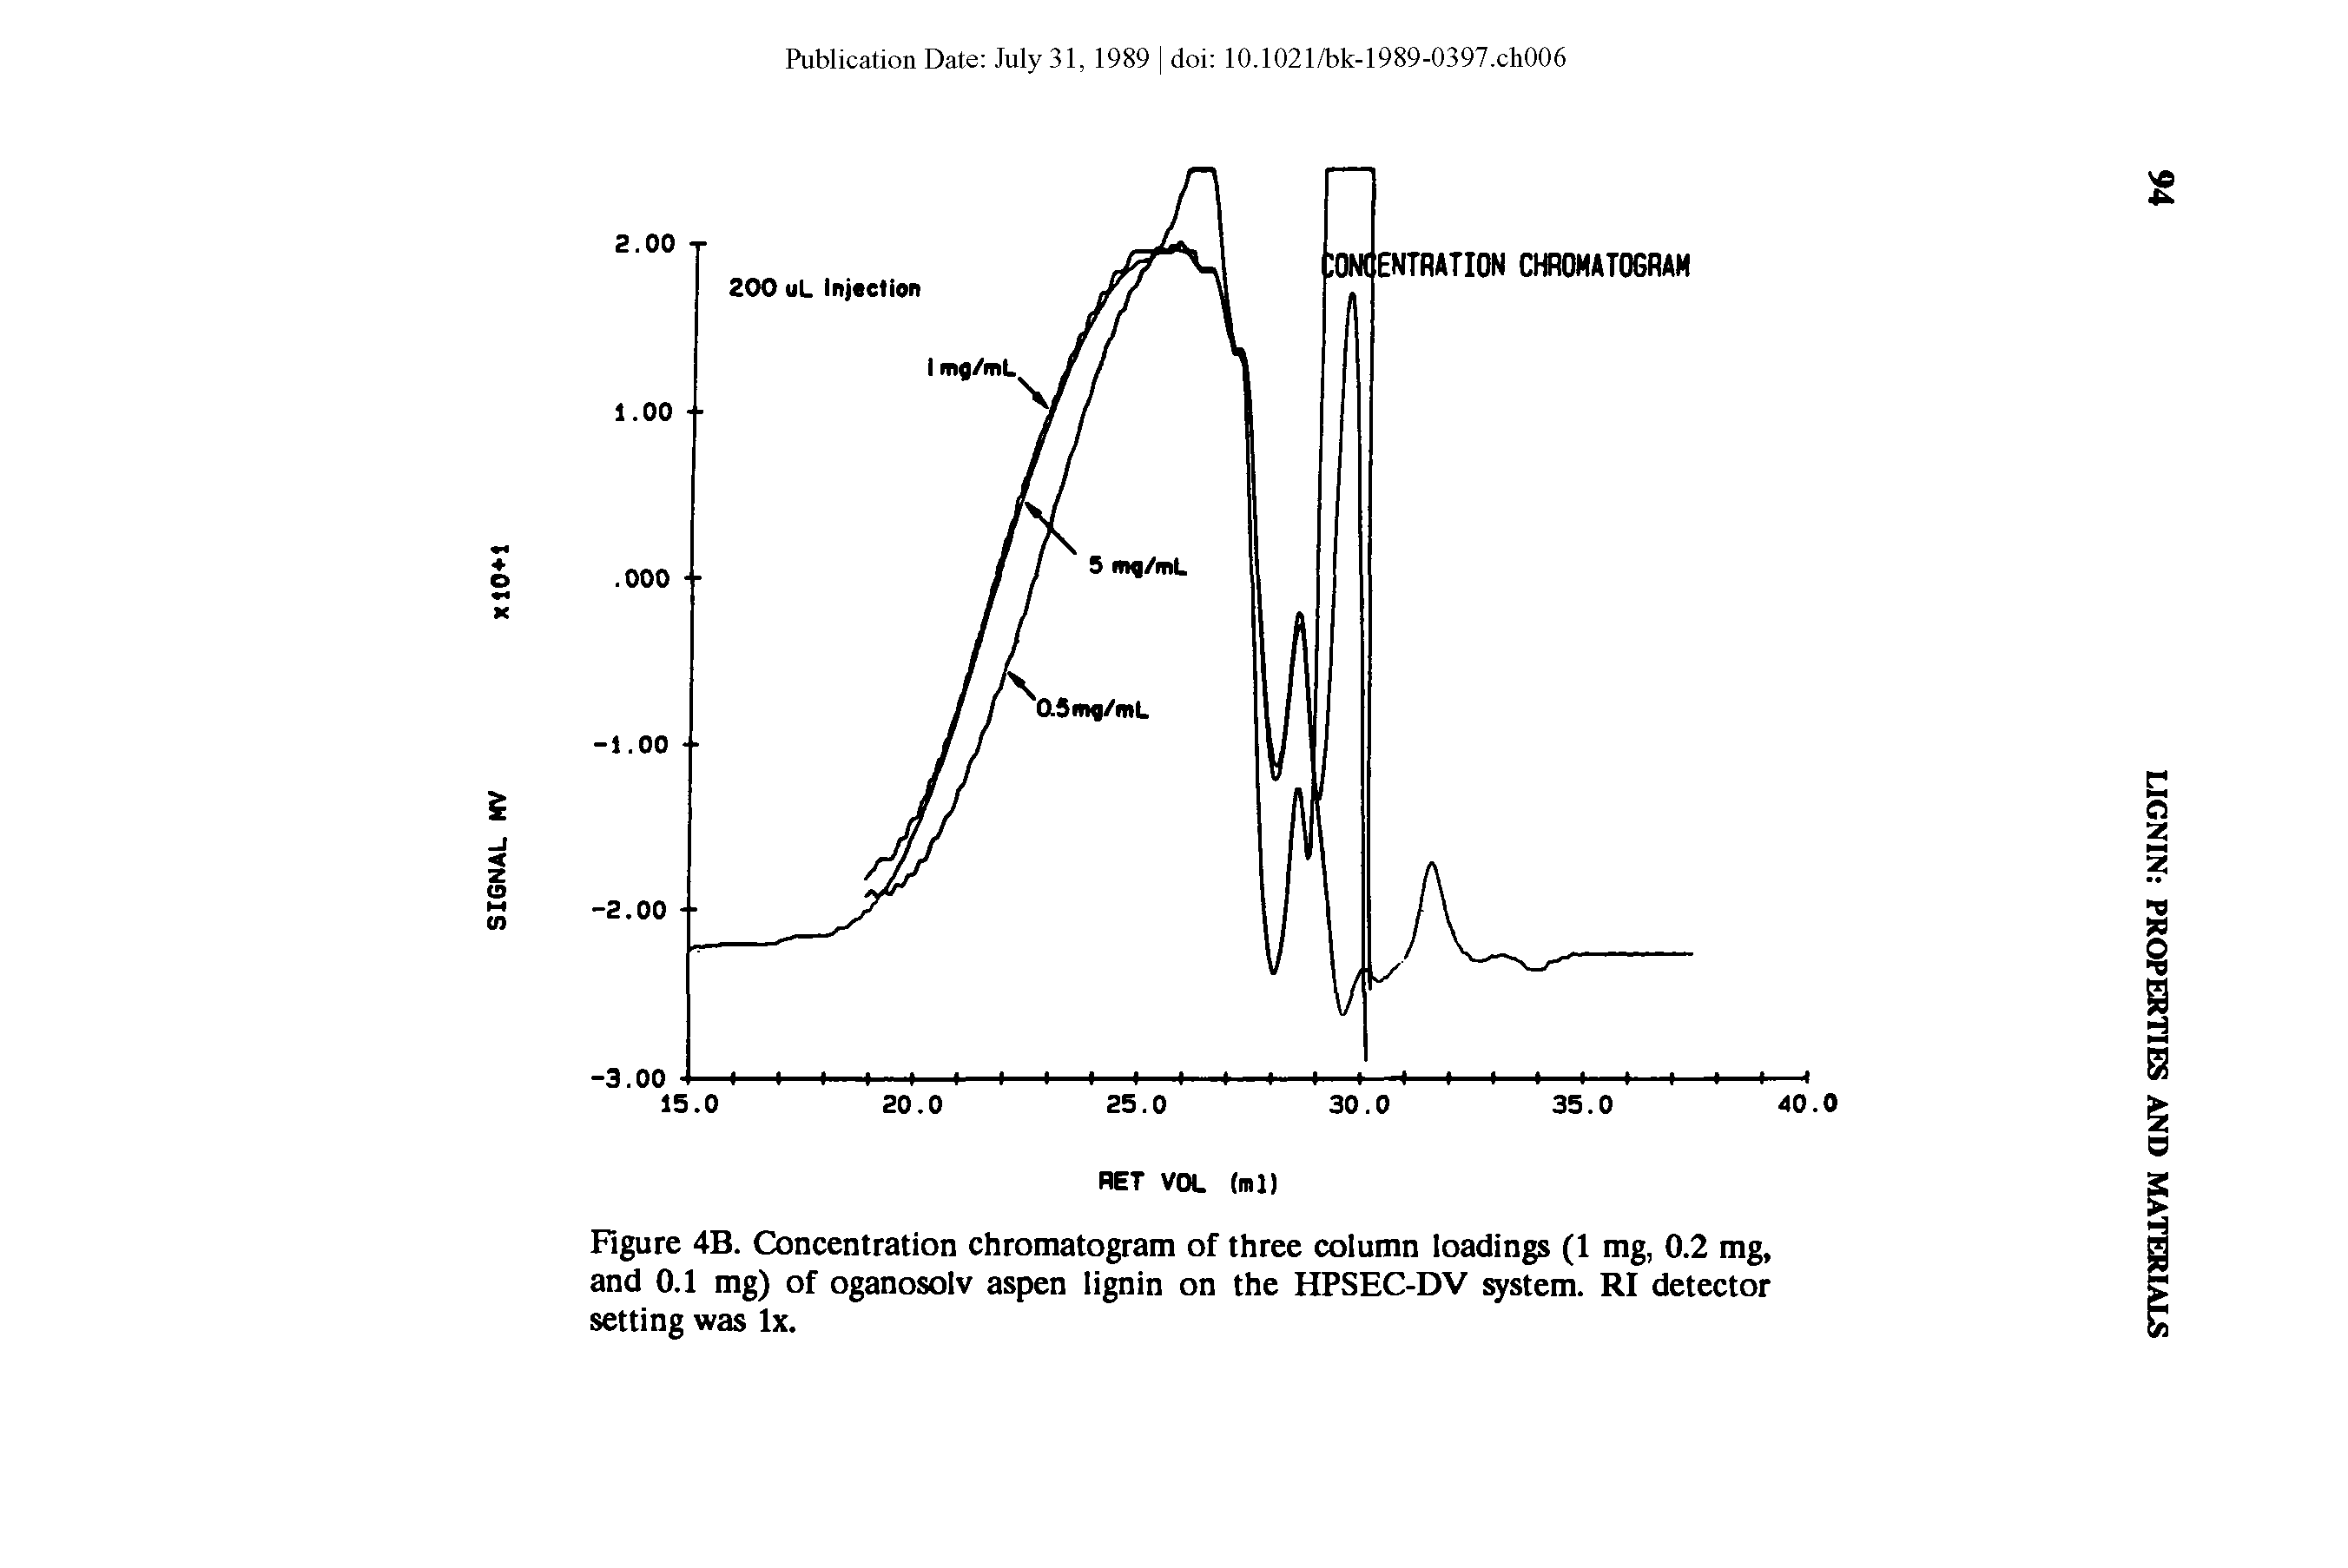 Figure 4B. Concentration chromatogram of three column loadings (1 mg, 0.2 mg, and 0.1 mg) of oganosolv aspen lignin on the HPSEC-DV system. RI detector setting was lx.